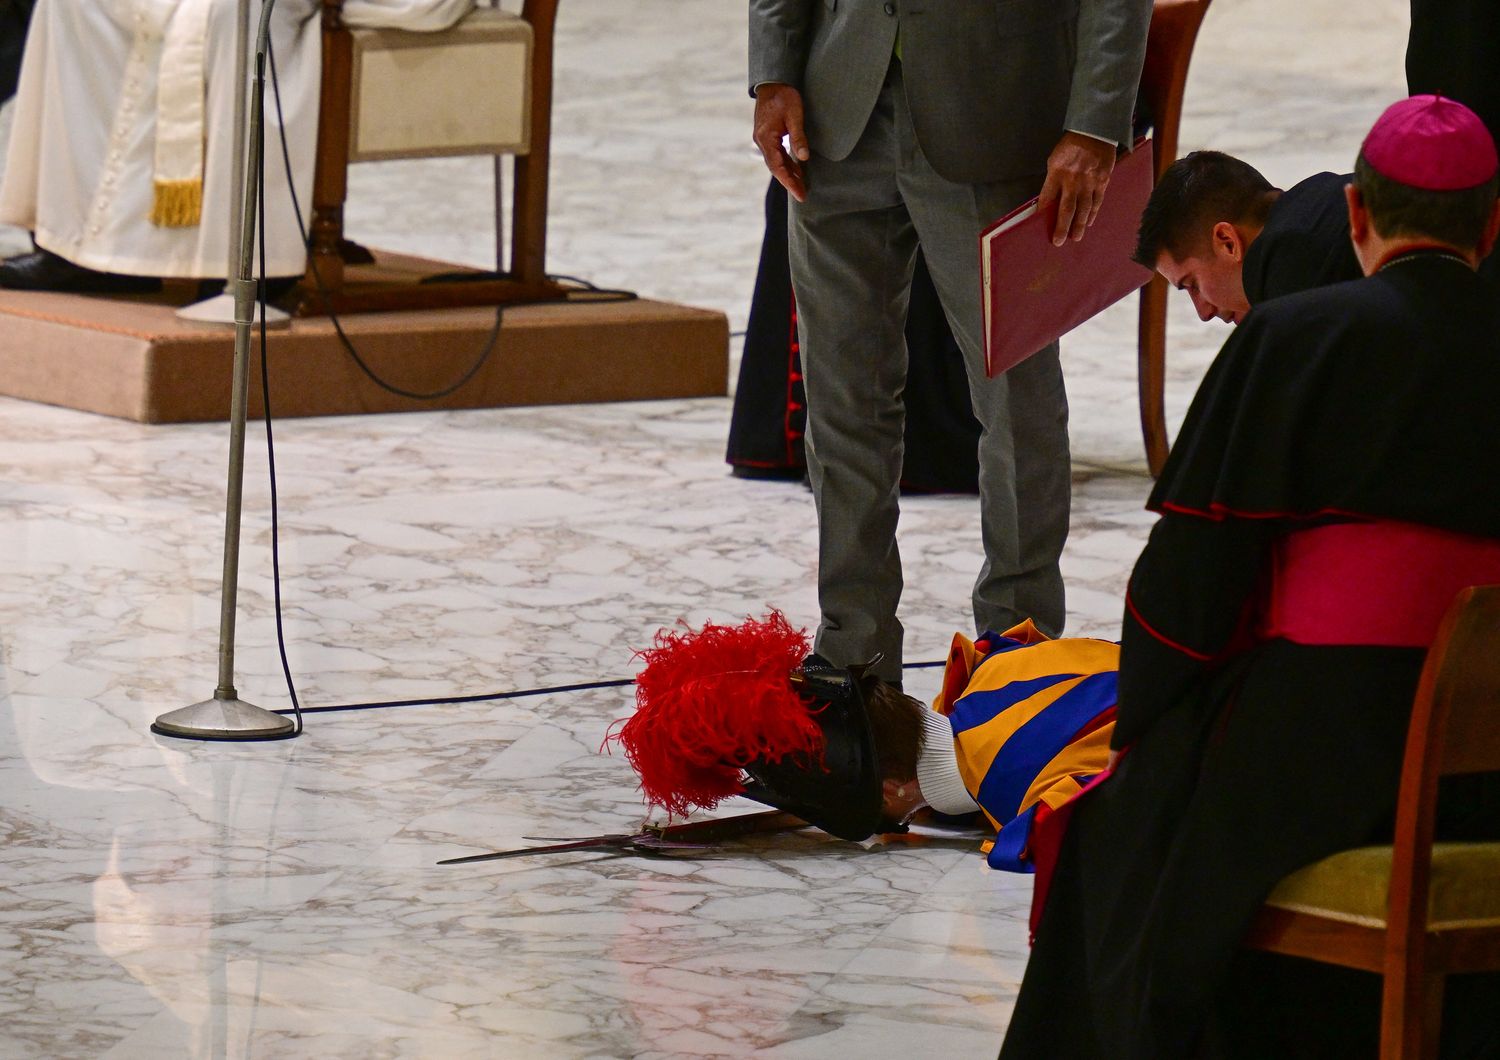 La guardia svizzera svenuta durate l'udienza papale